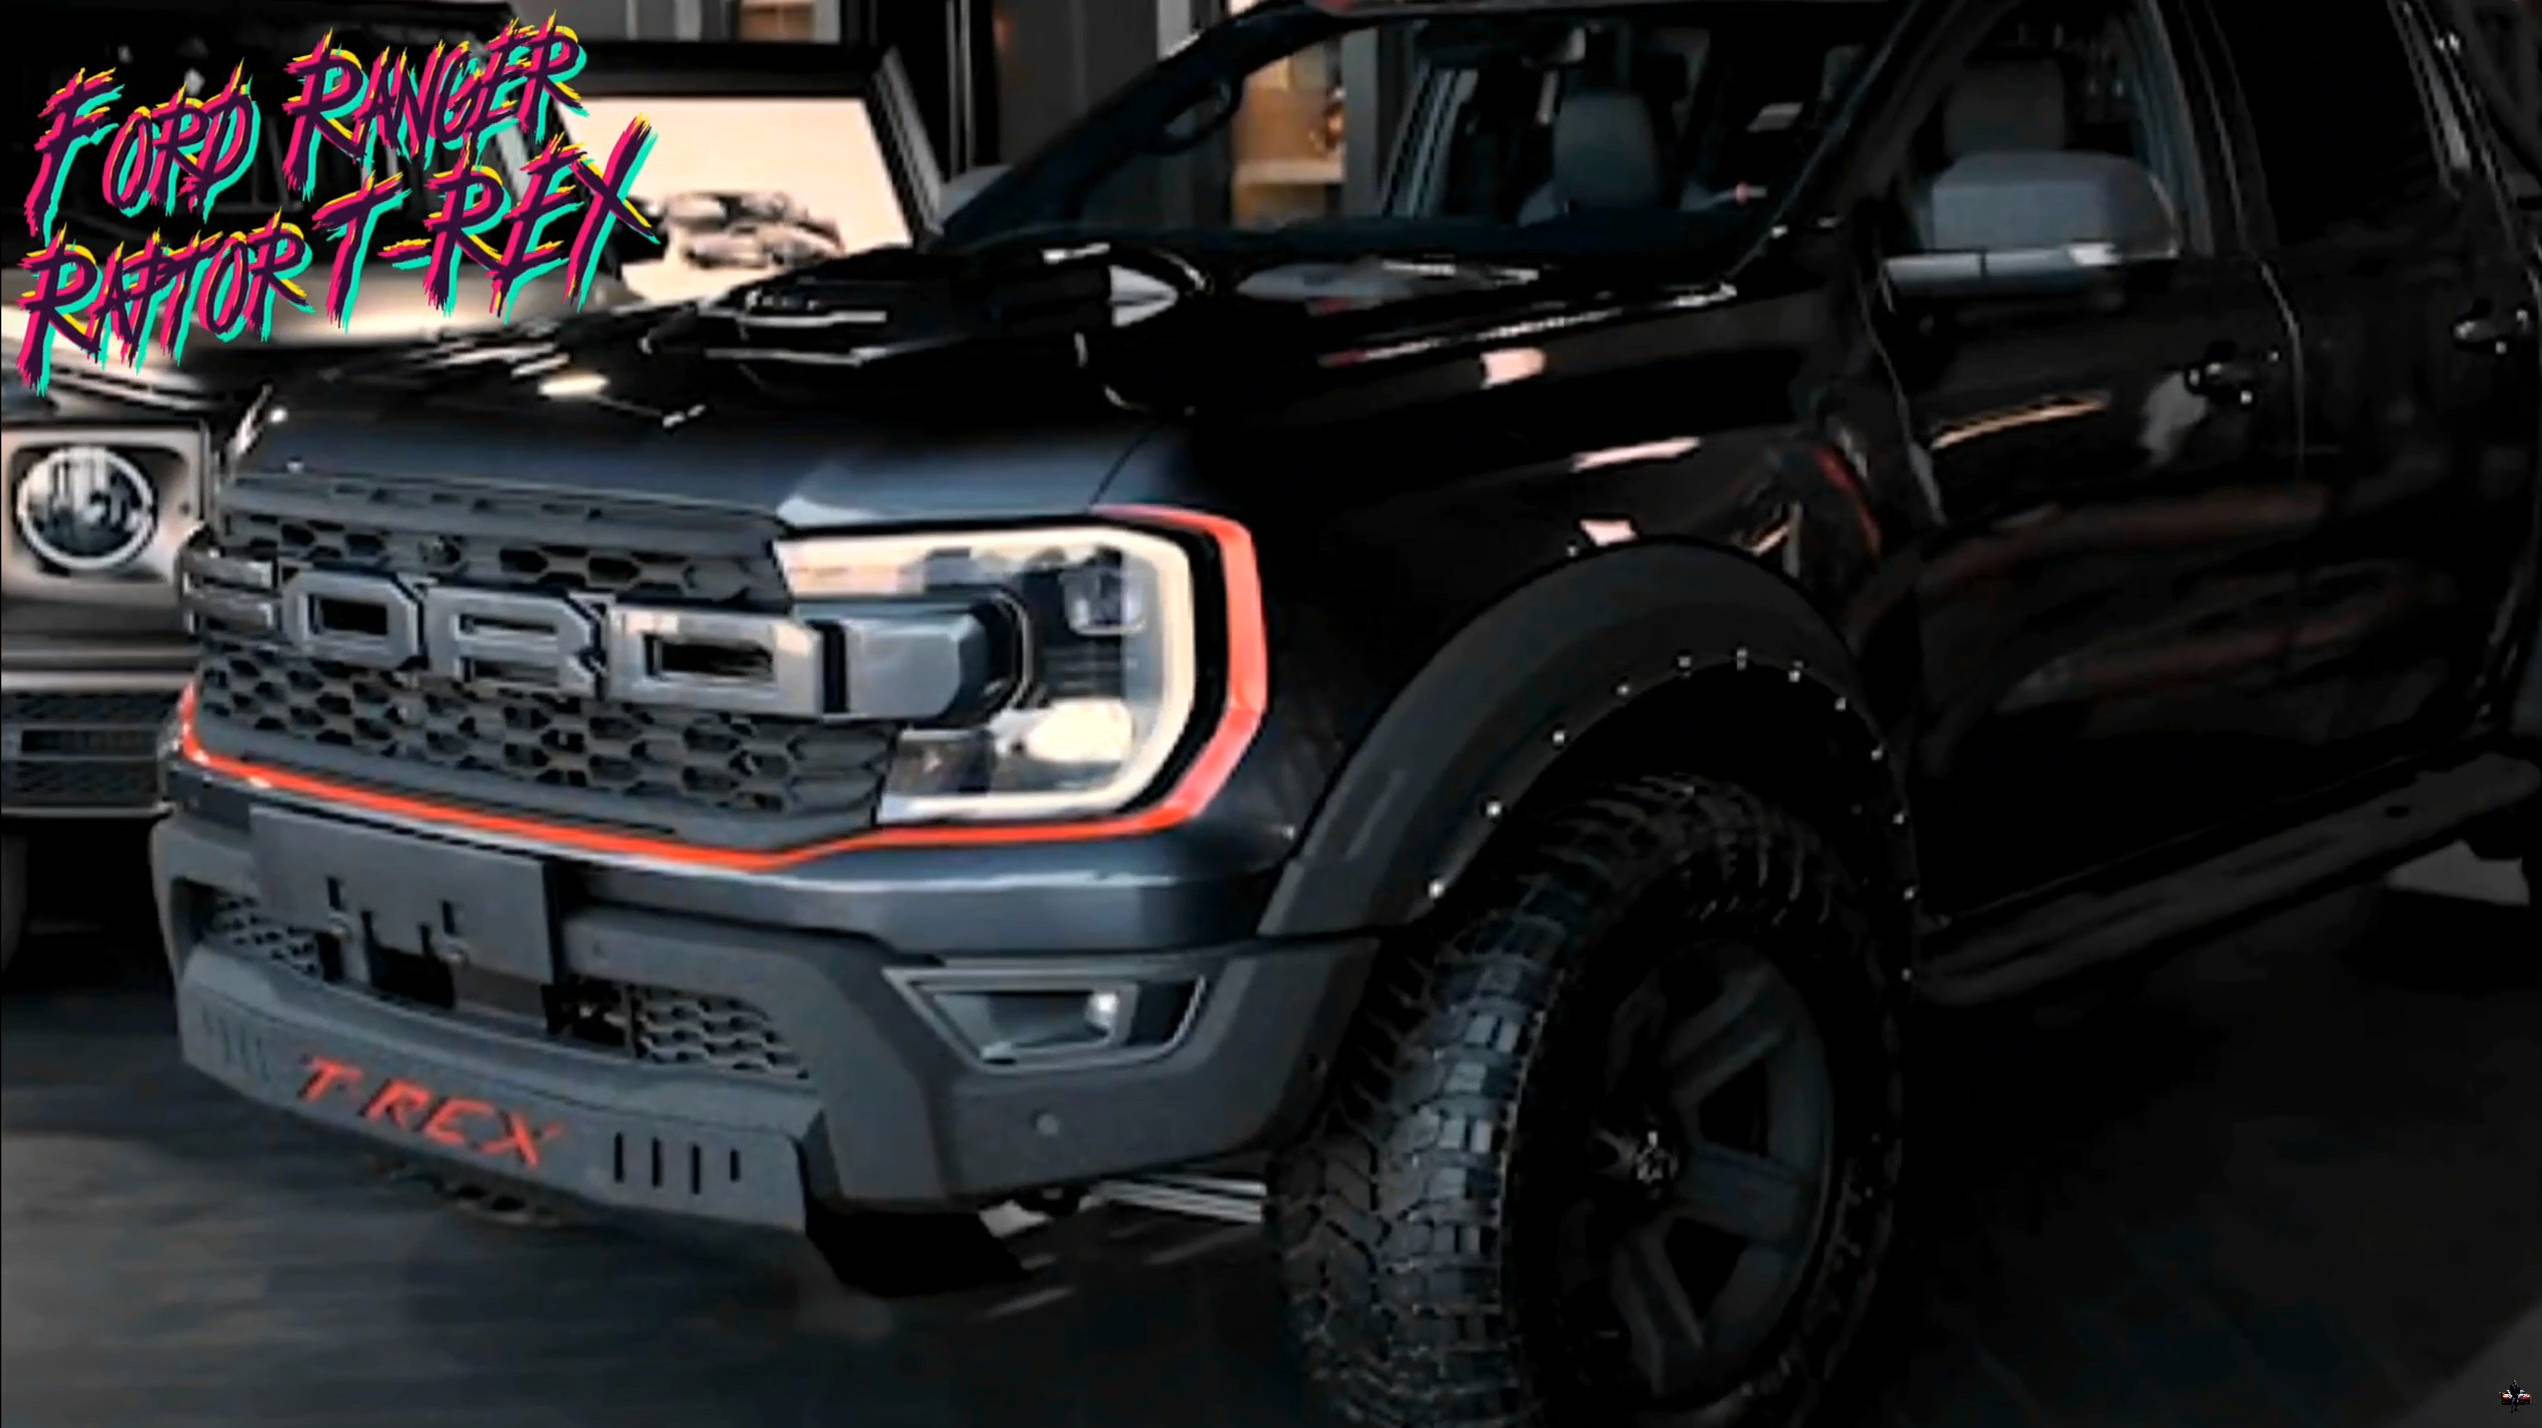 "Ford Ranger Raptor T-REX": Безмолвный обзор интерьера и экстерьера